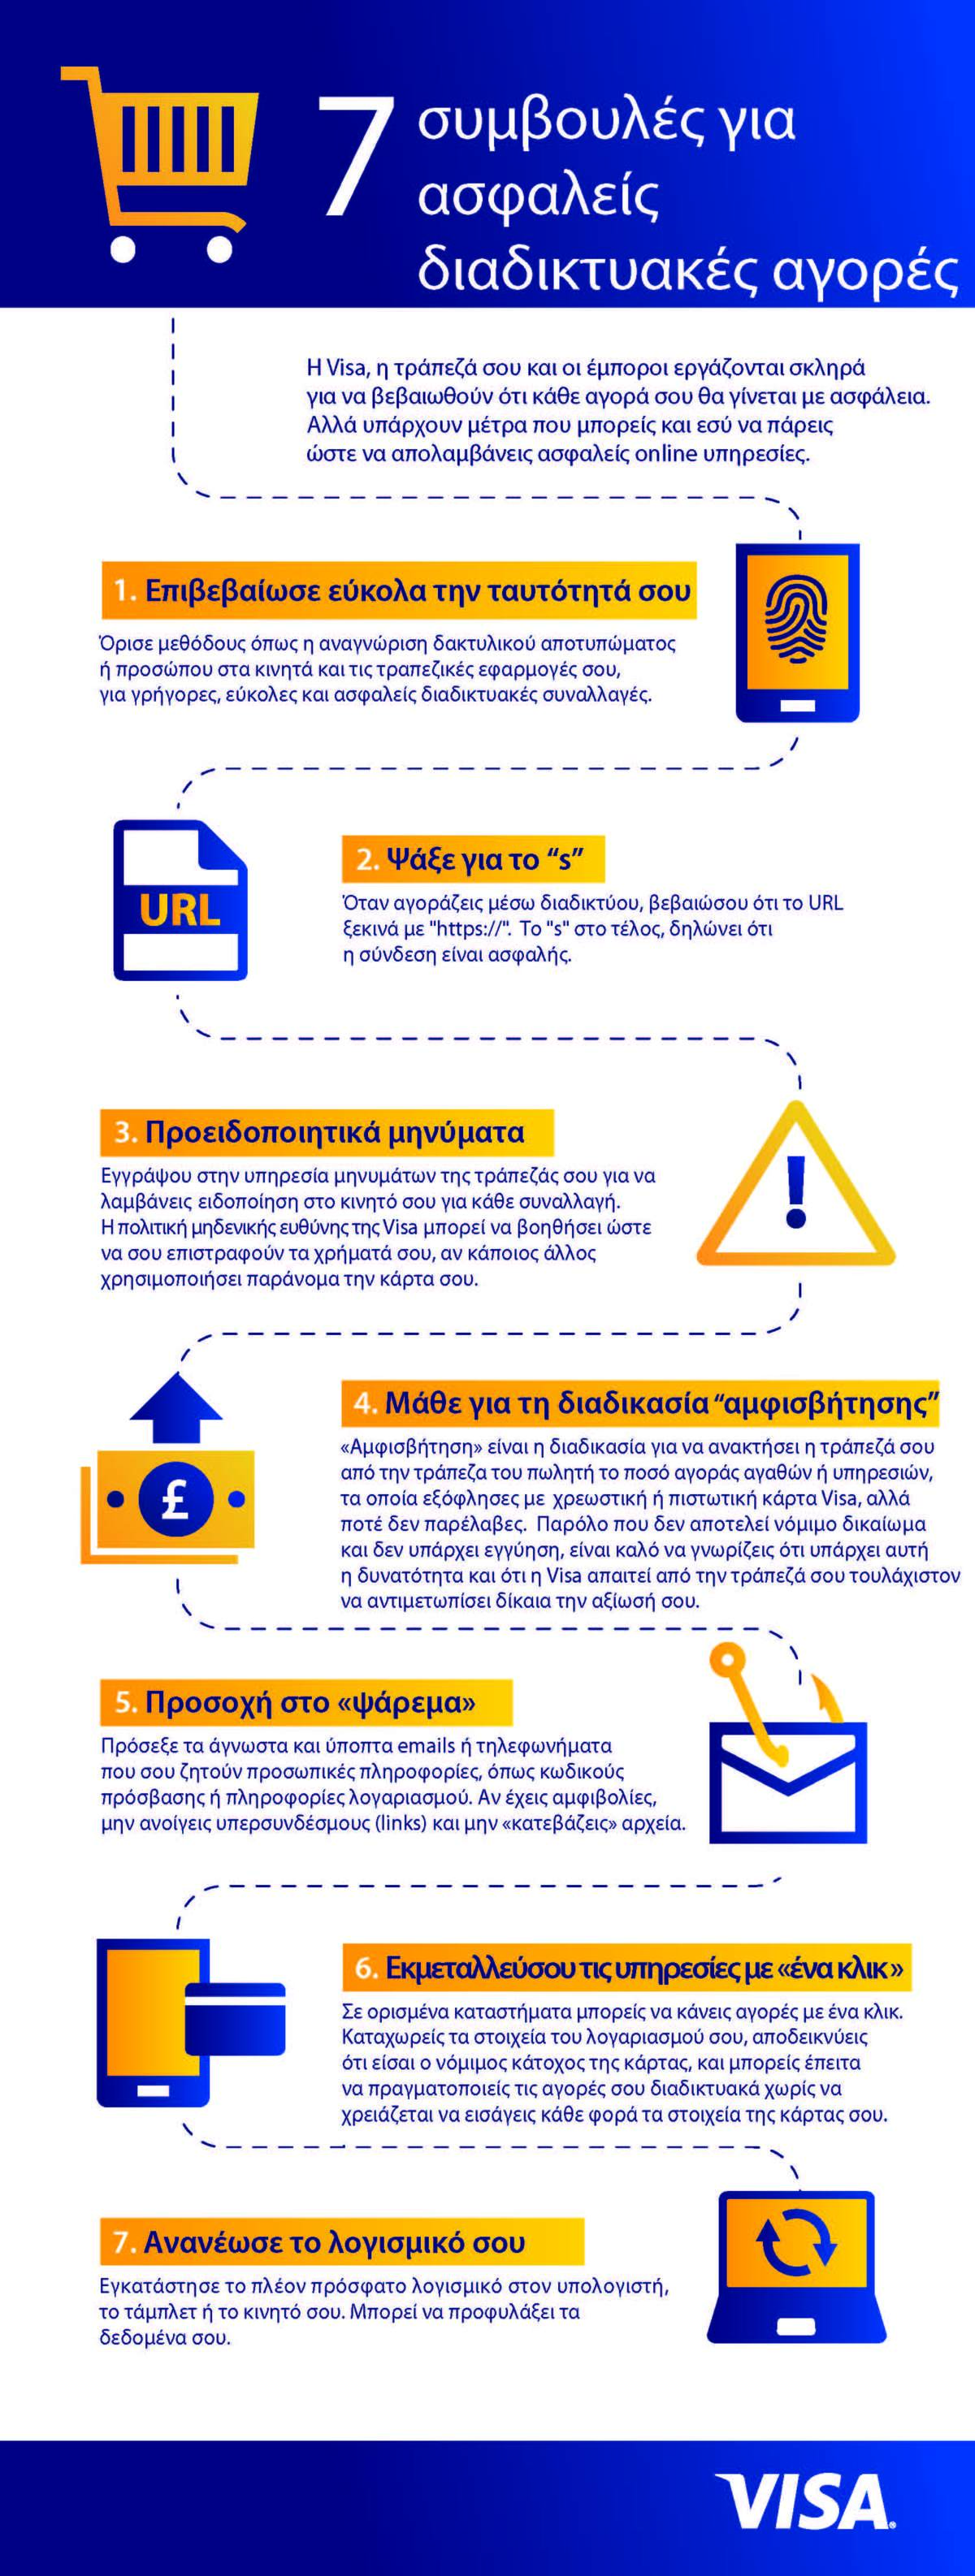 Visa 7 tips Infographic 